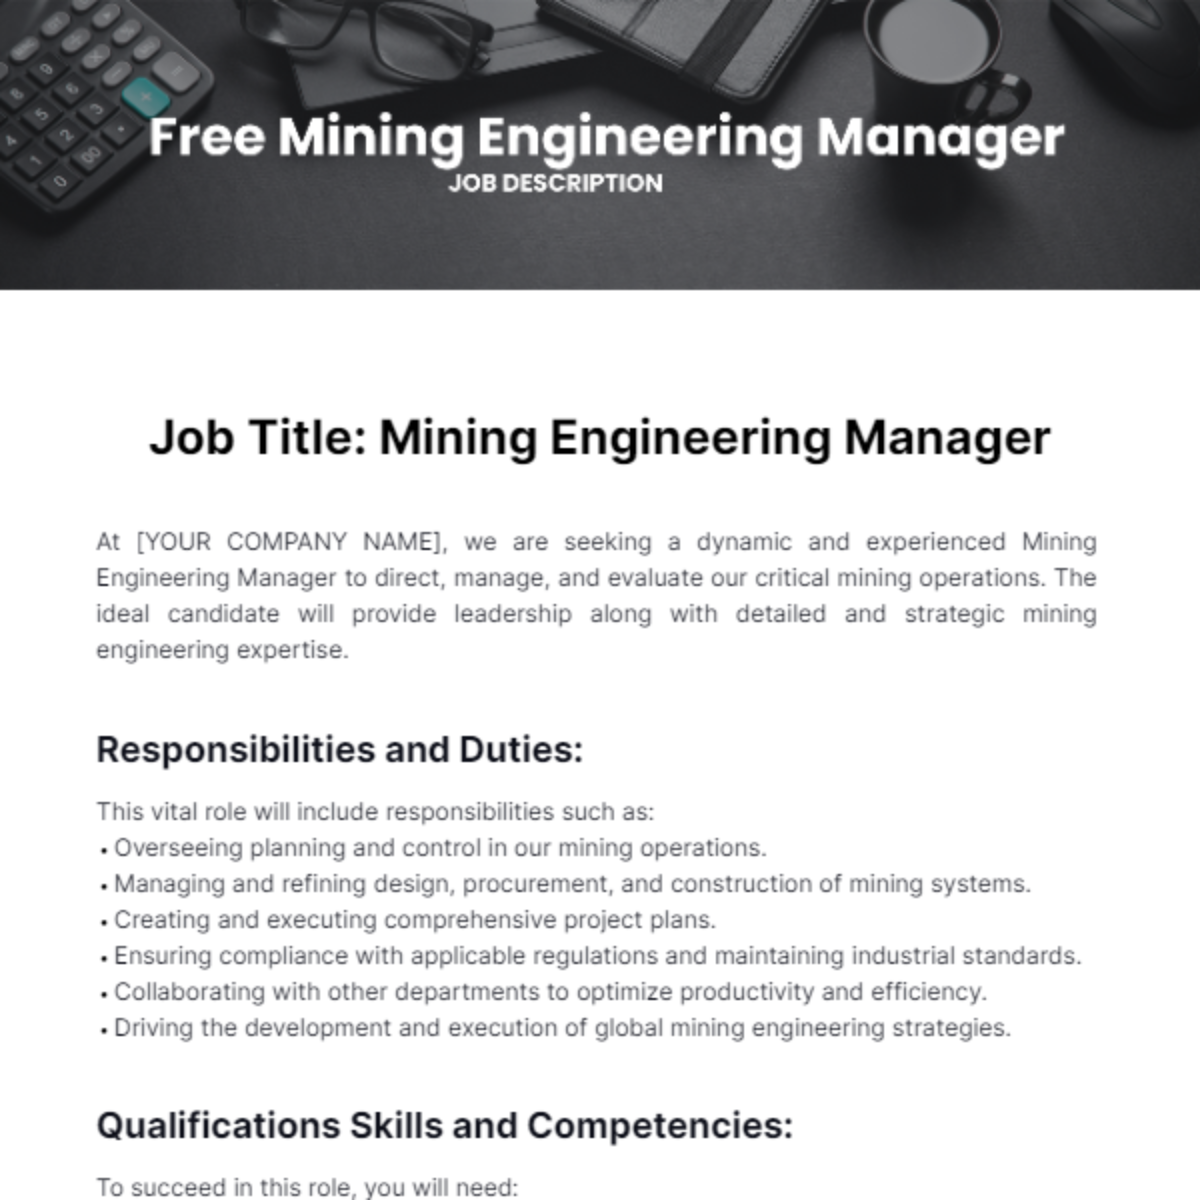 Free Mining Engineering Manager Job Description Template